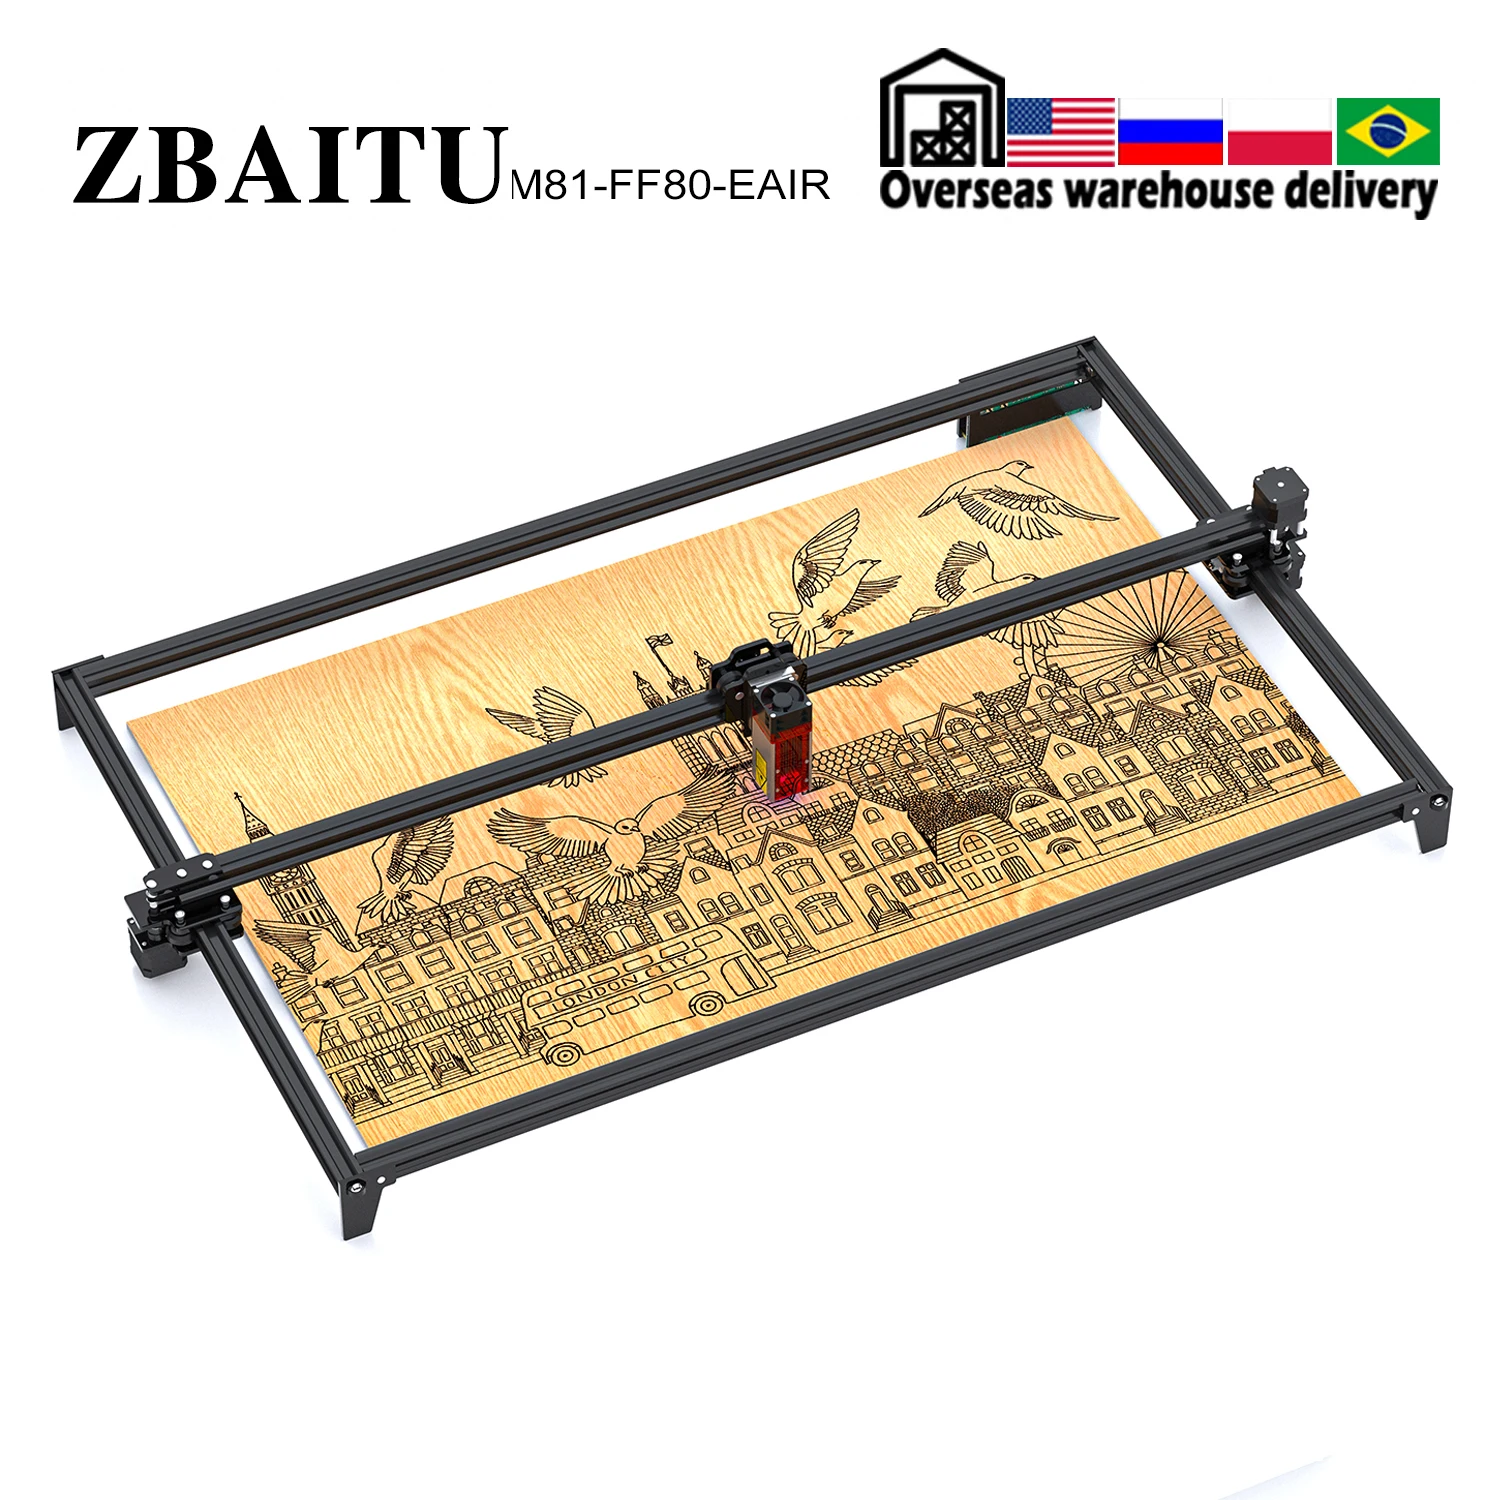 ZBAITU Wireless Laser Engraver Machine CNC Router Laser Engraving Cutting Machine 80W Laser Module With Air Assist Cut Wood FAC